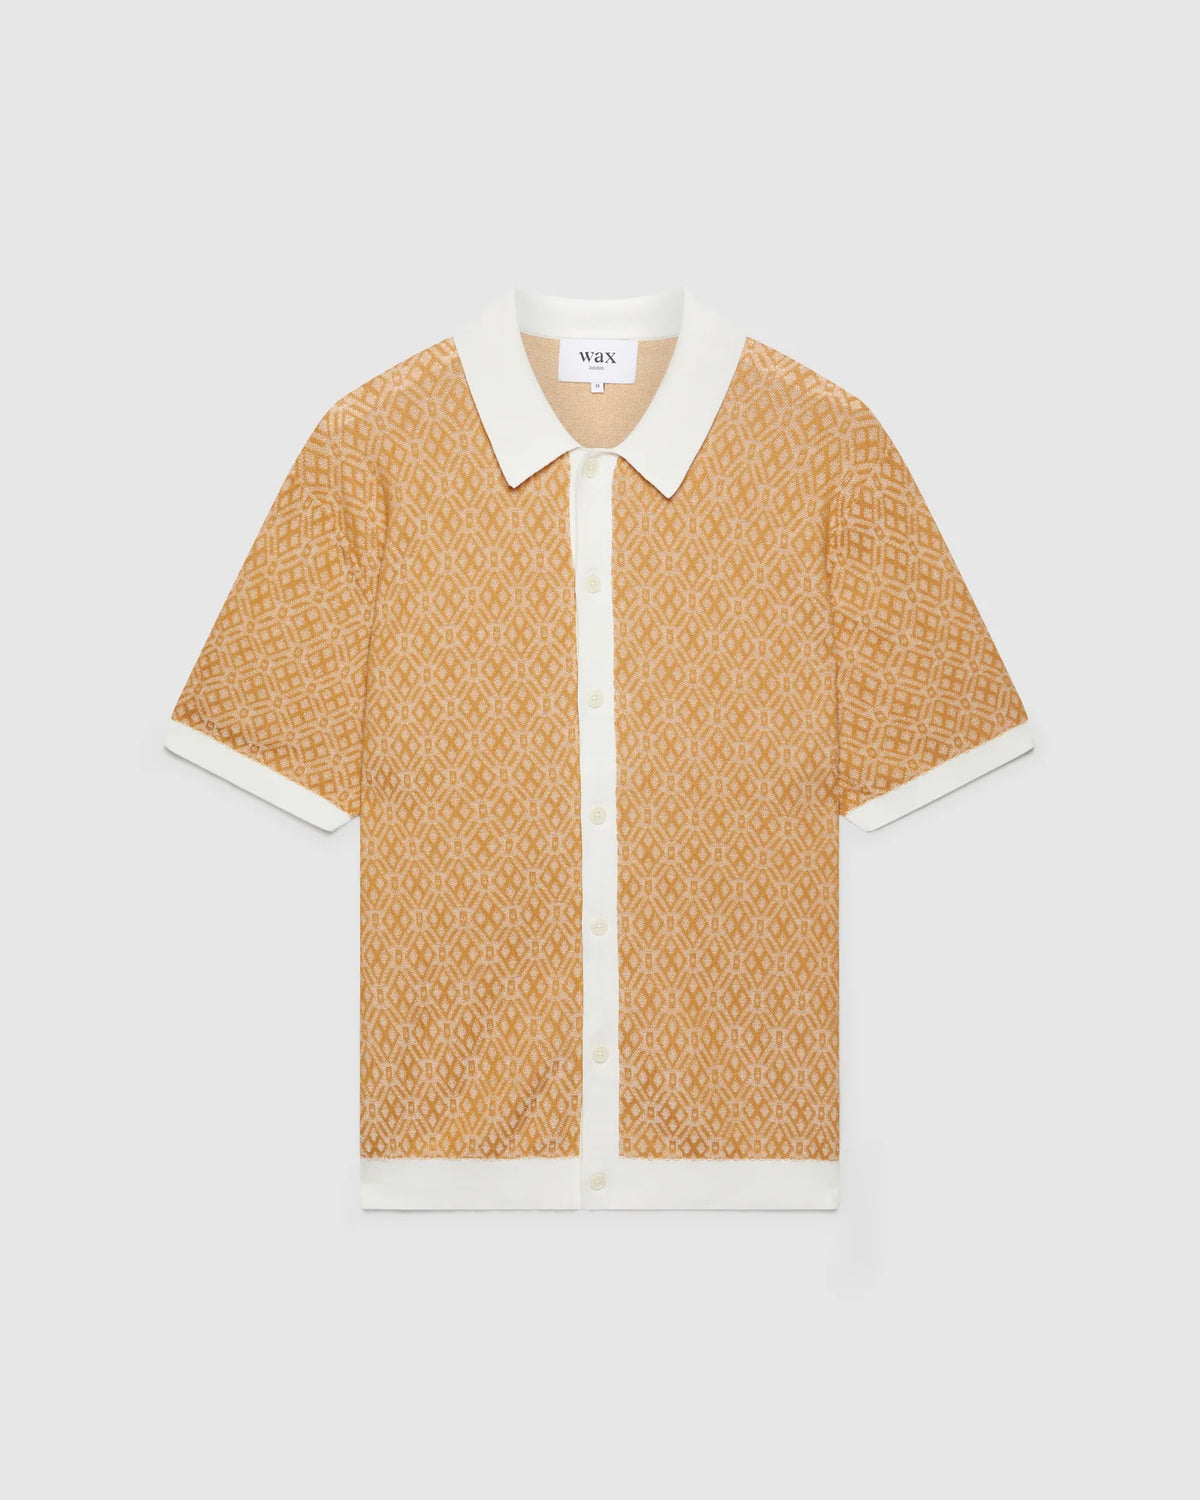 WAX LONDON CLOTHING Tellaro Short Sleeve Shirt